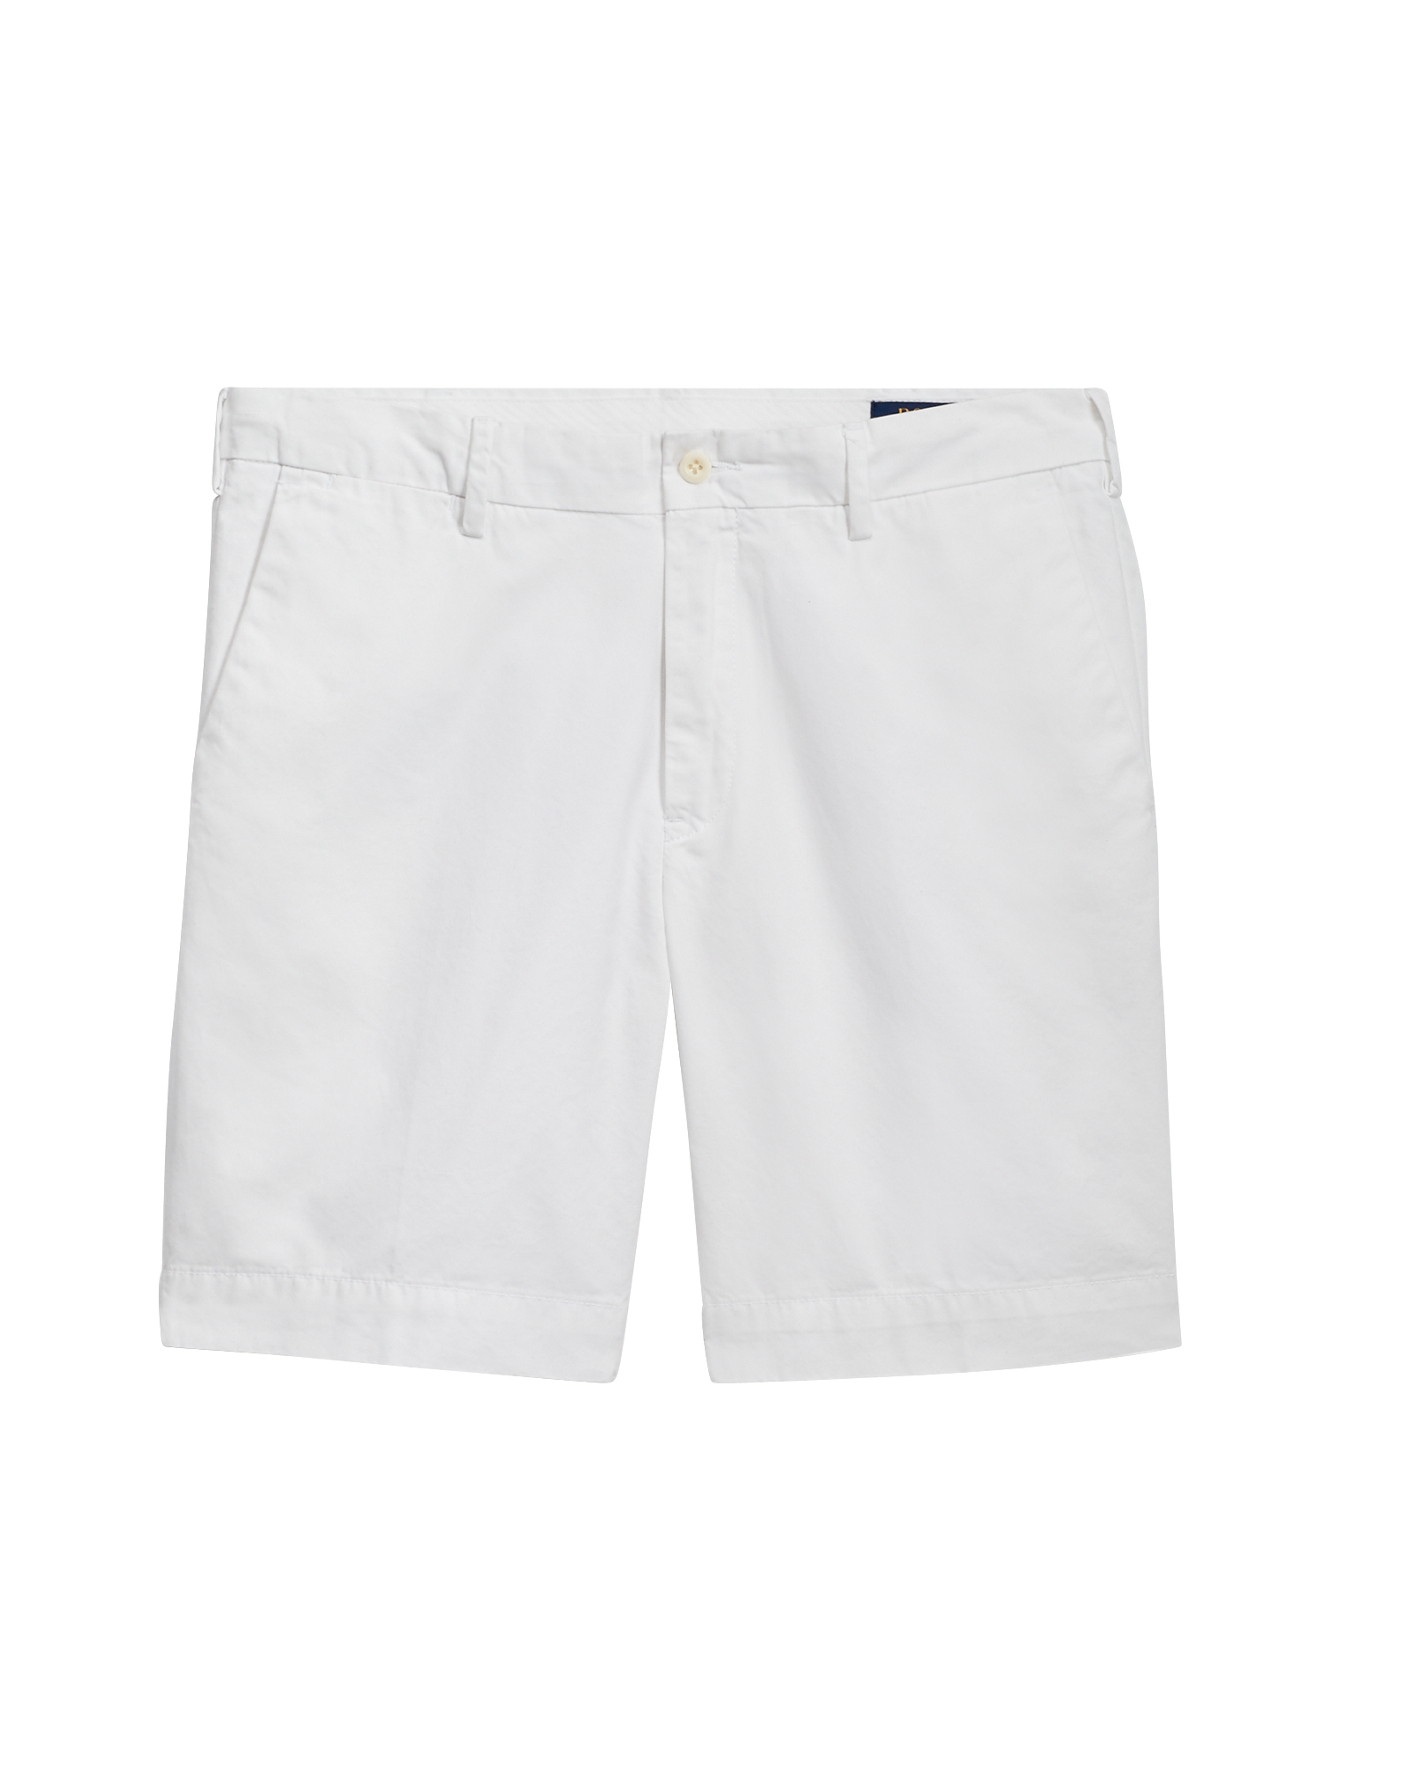 Men's Polo Shorts - Dress, Khaki, & More | Ralph Lauren